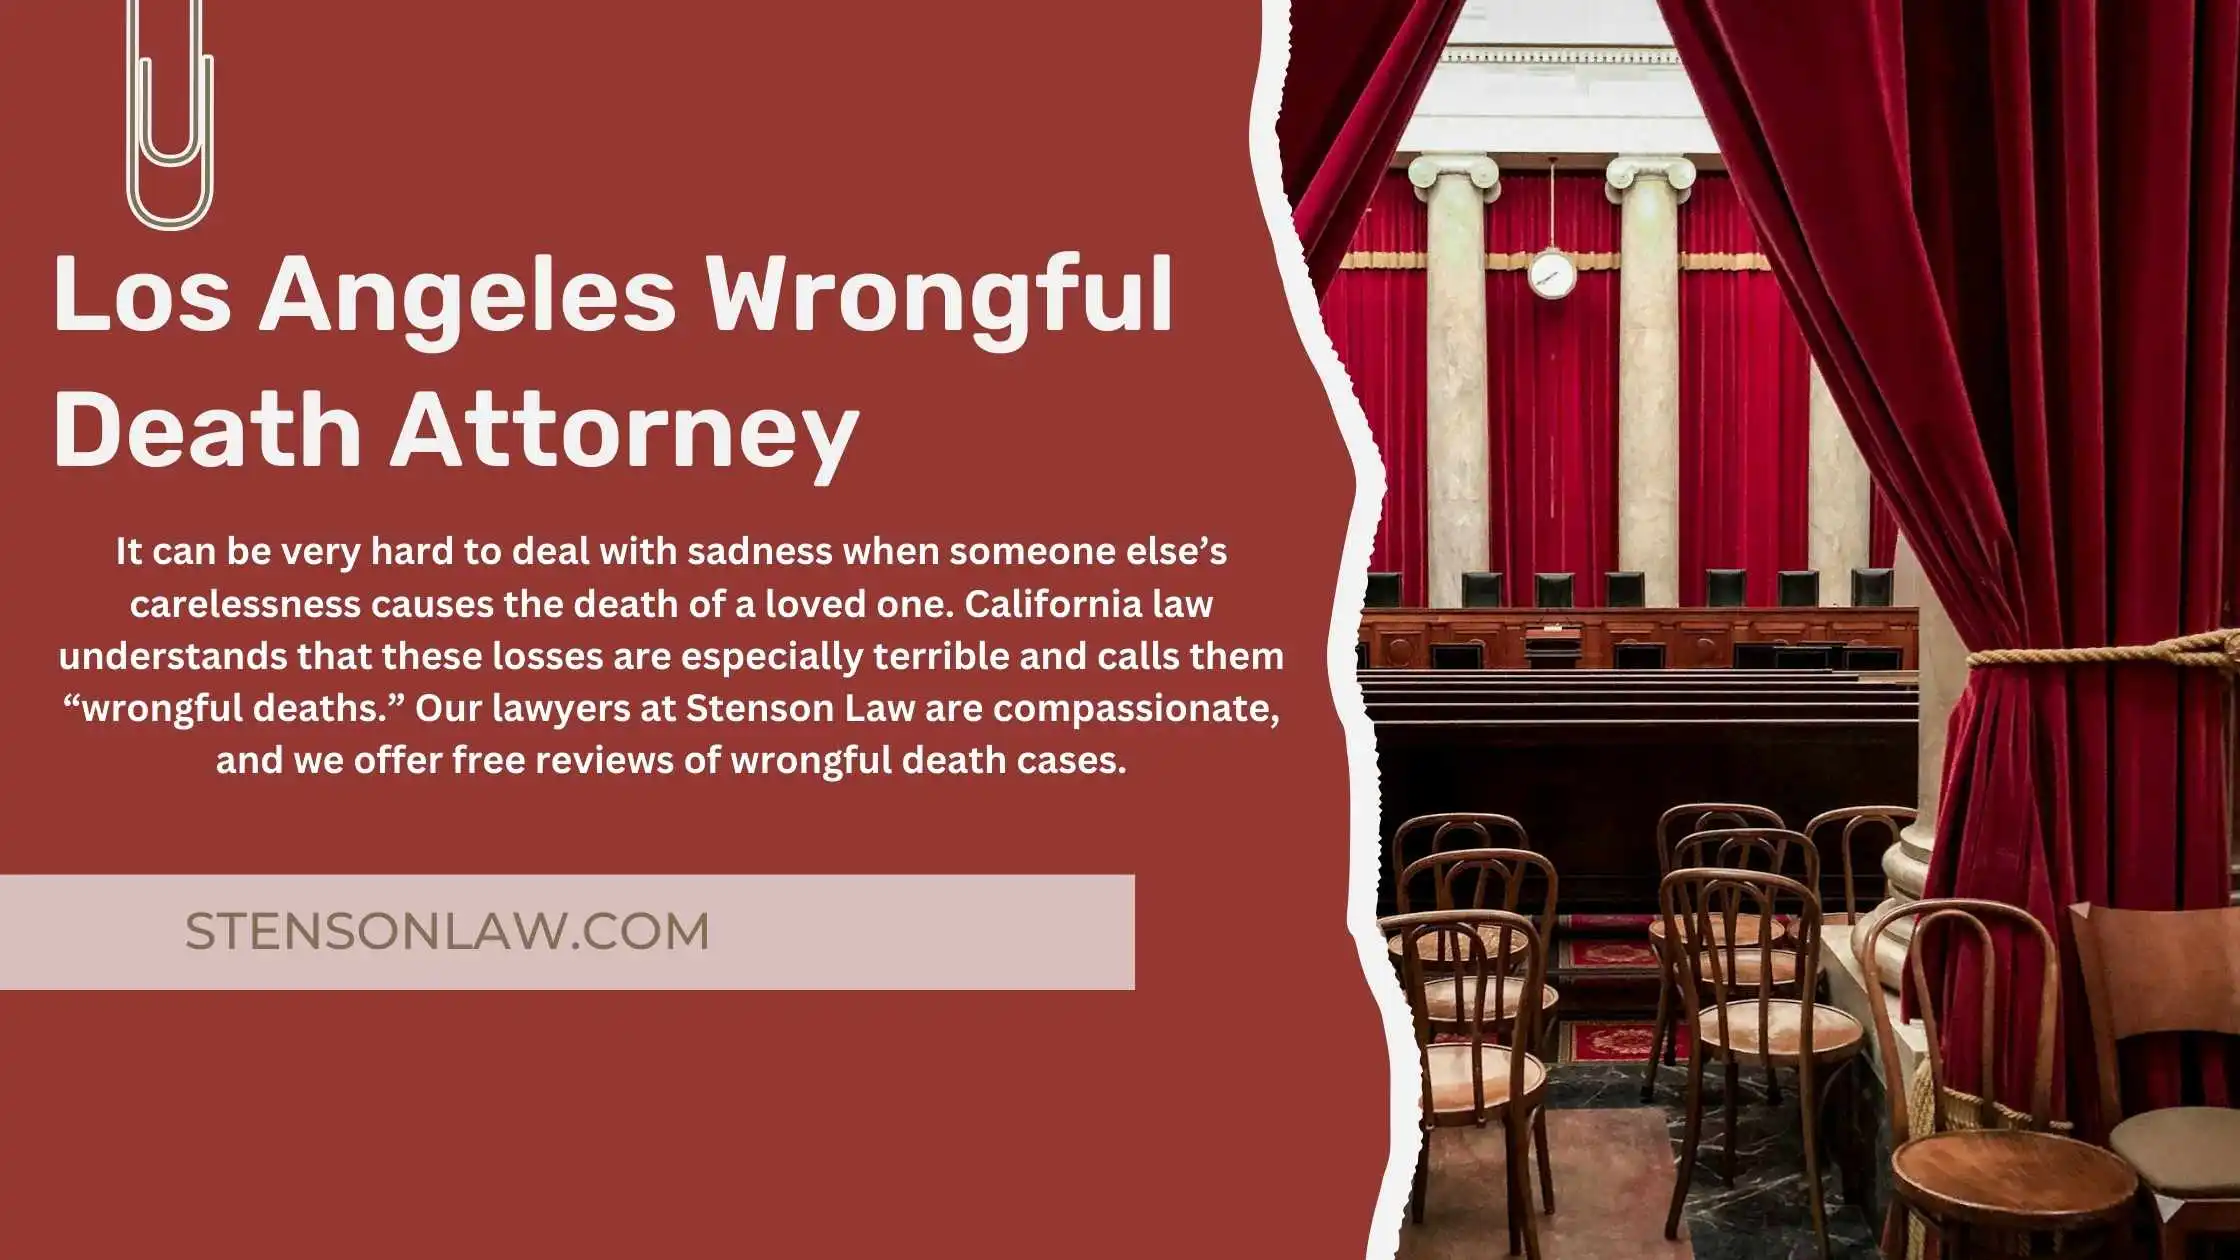 Los Angeles Wrongful Death Attorney